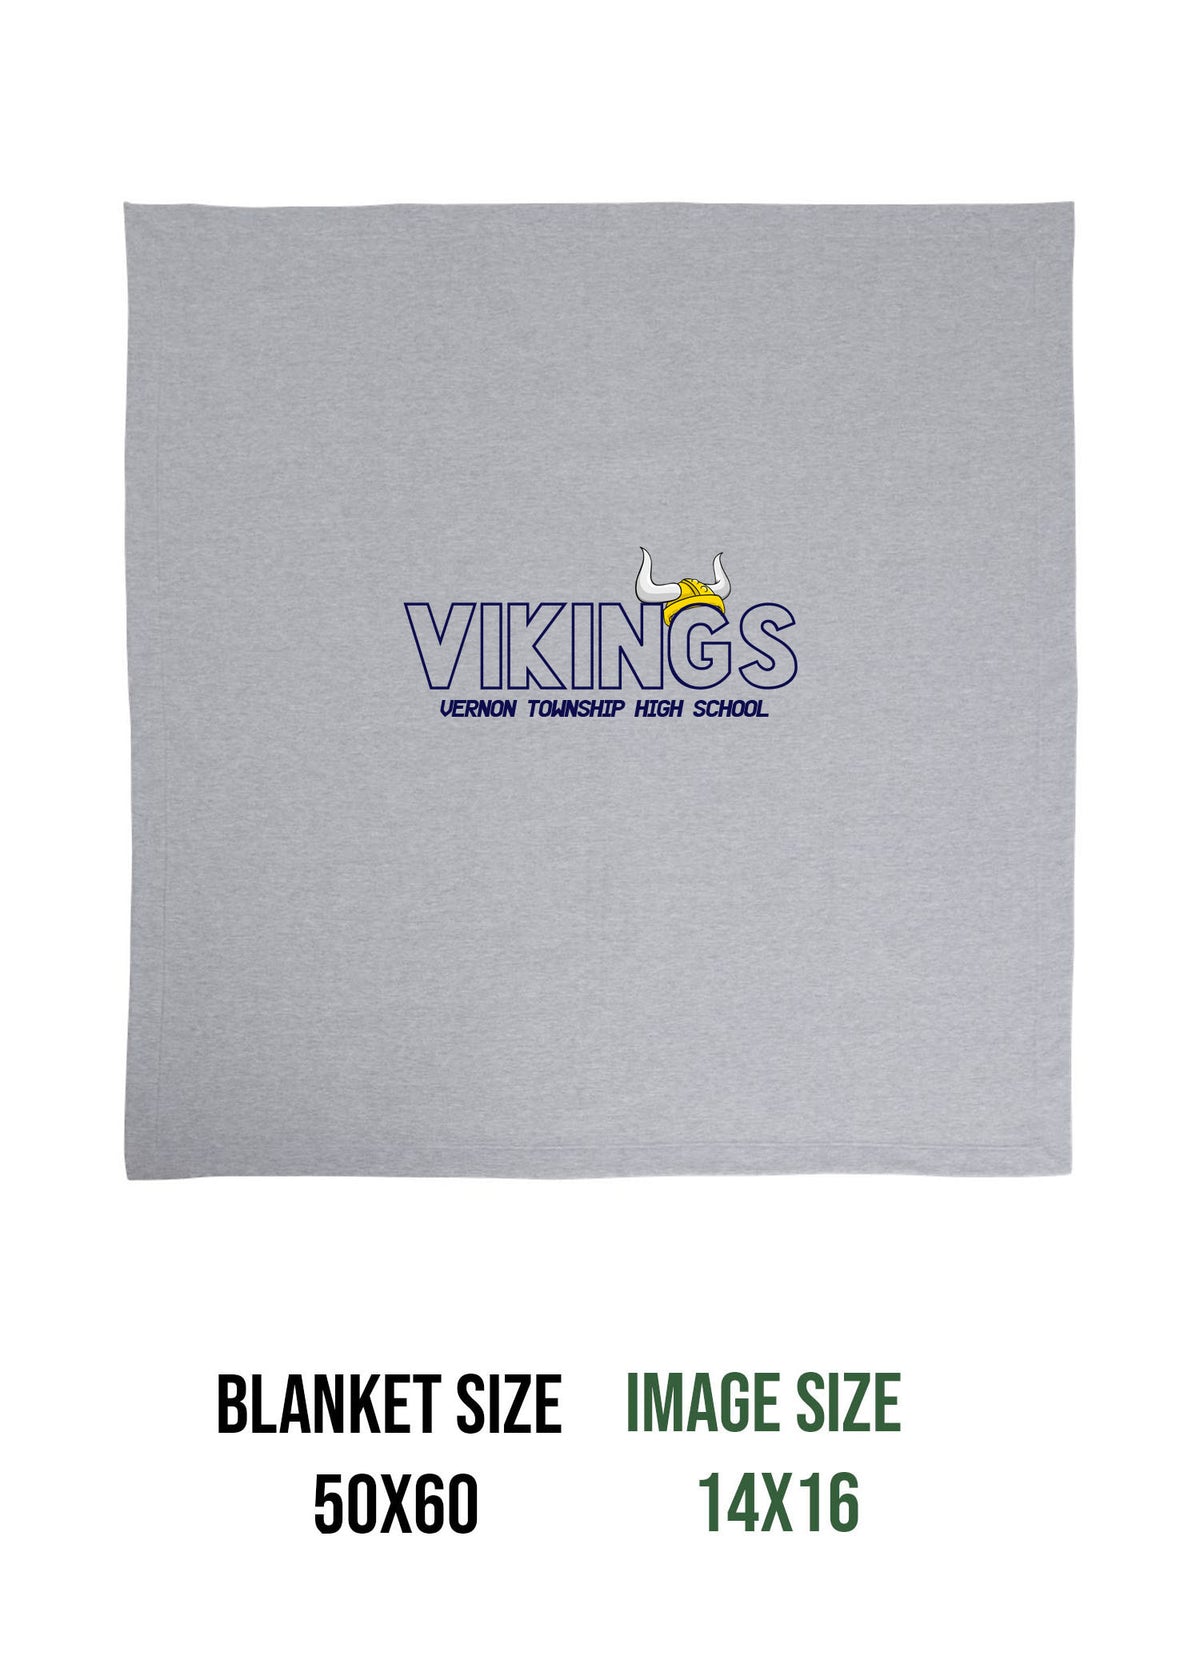 VTHS Design 13 Blanket